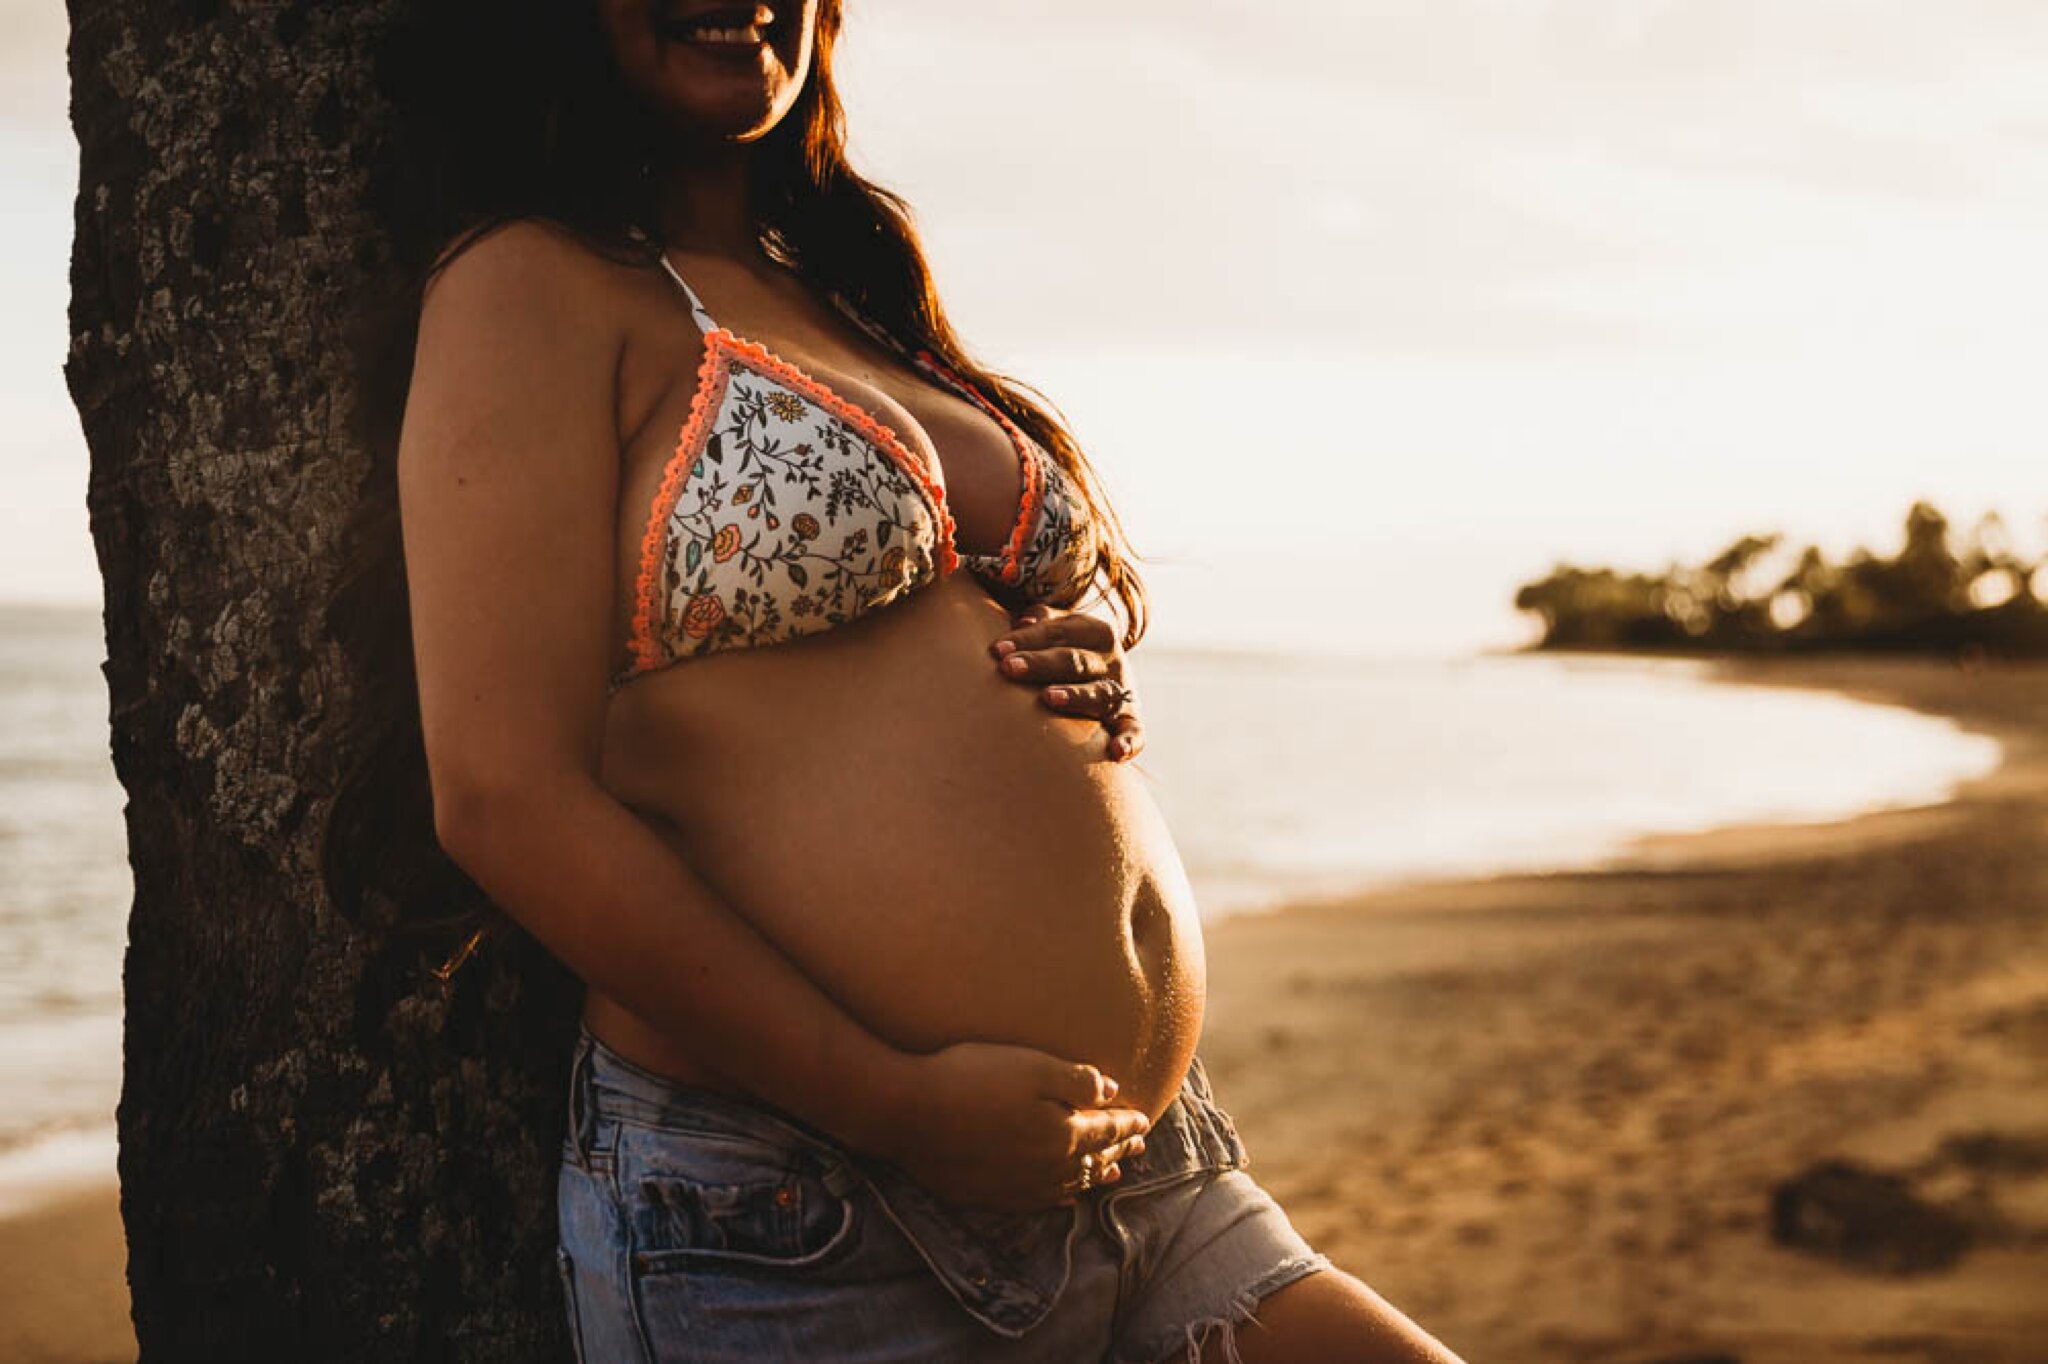 Sunset Maternity Photography Session at Kahala Beach in Oahu - Hawaii Family Photographer - Johanna Dye 3.jpg